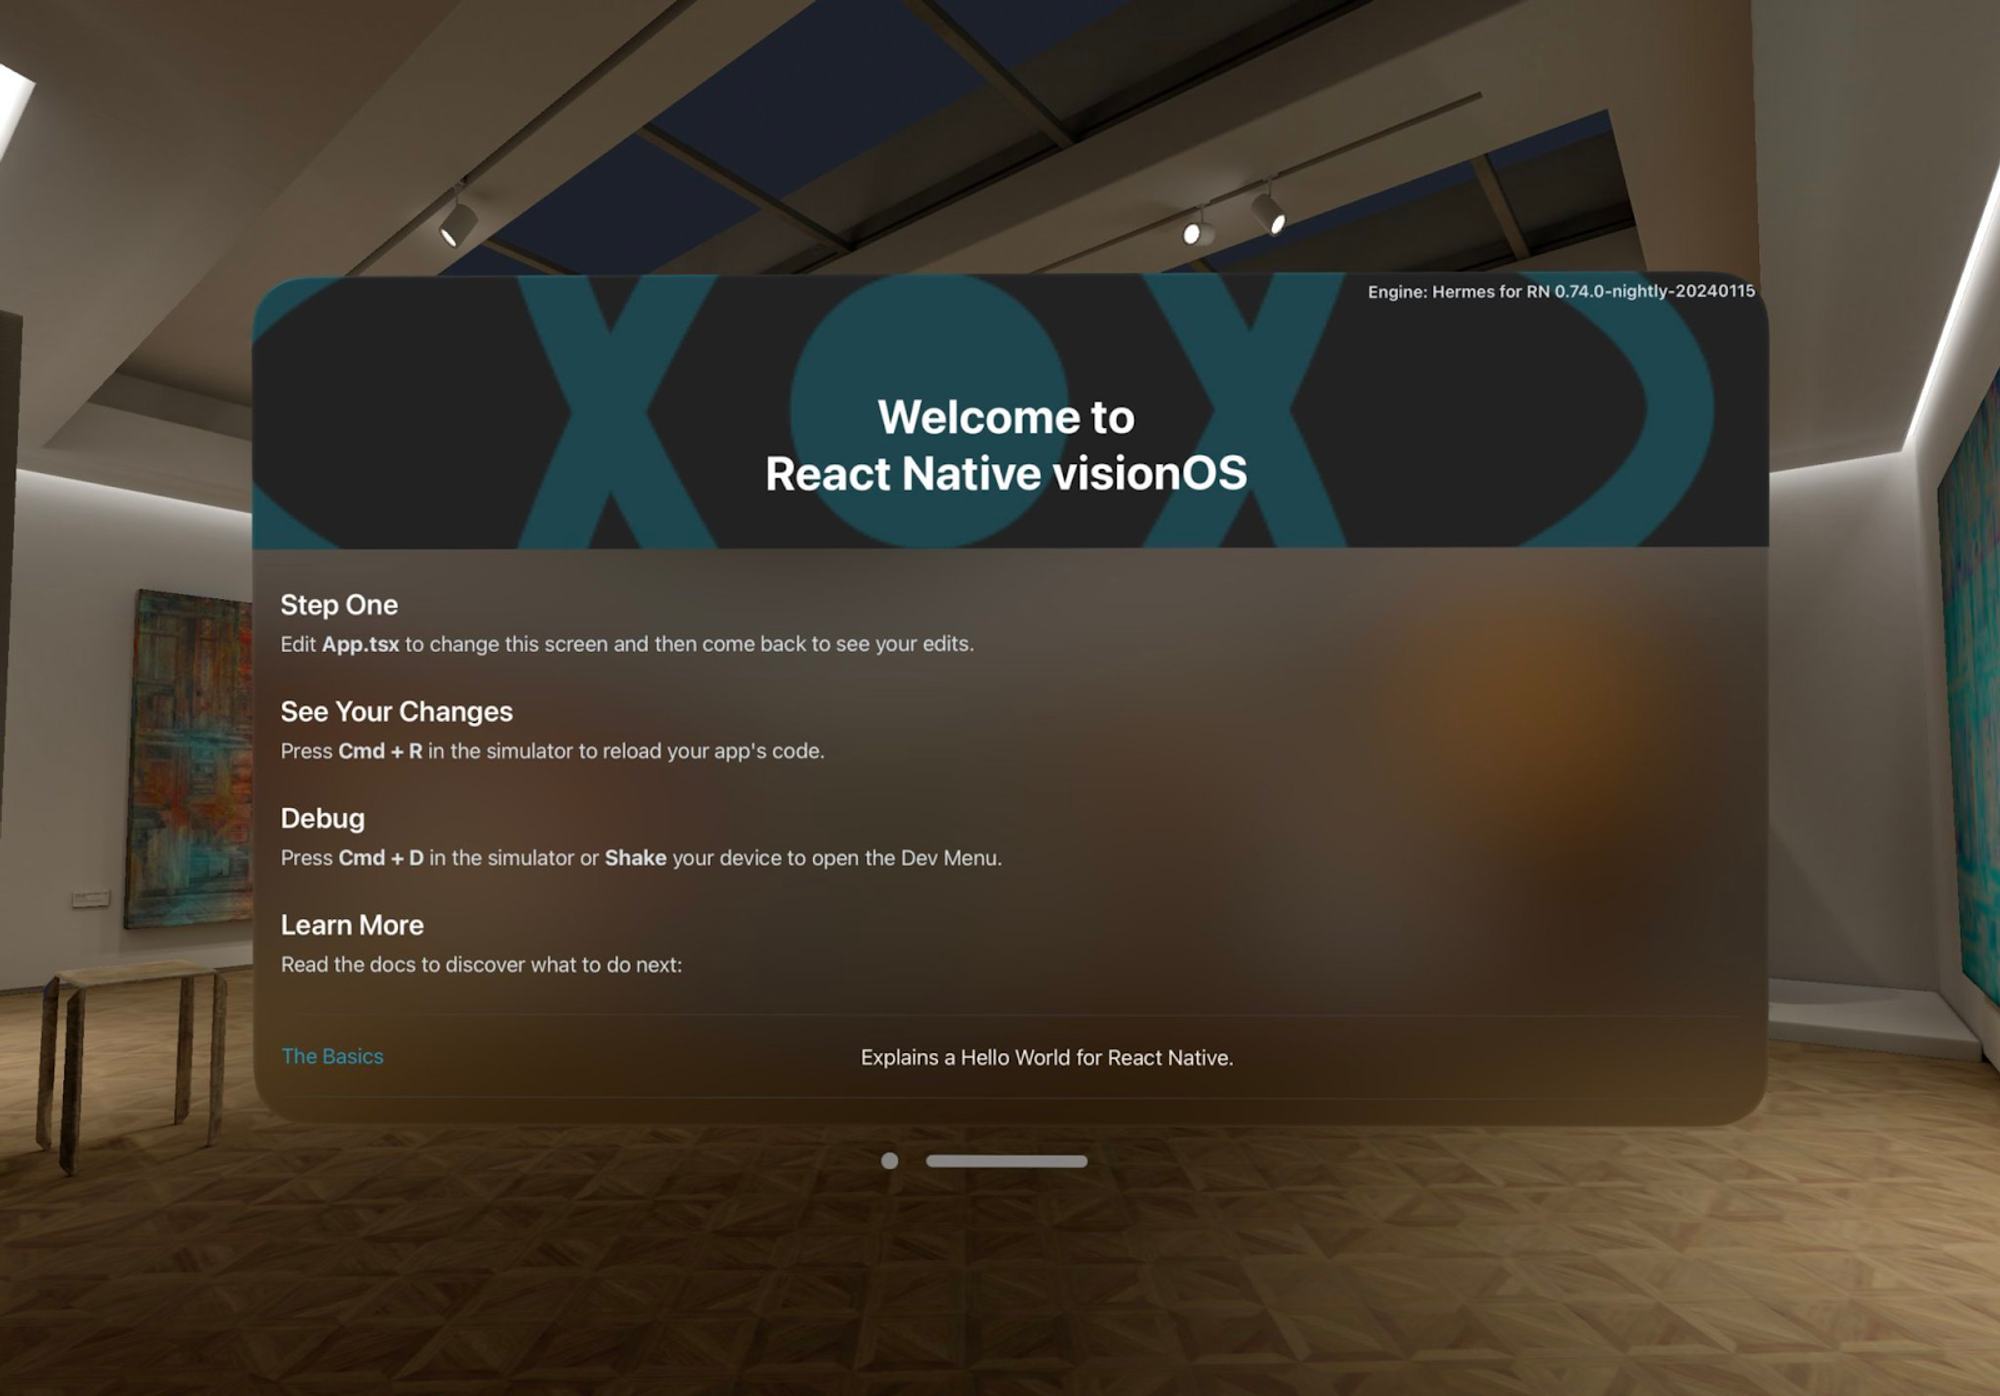 React native vision OS welcome screen